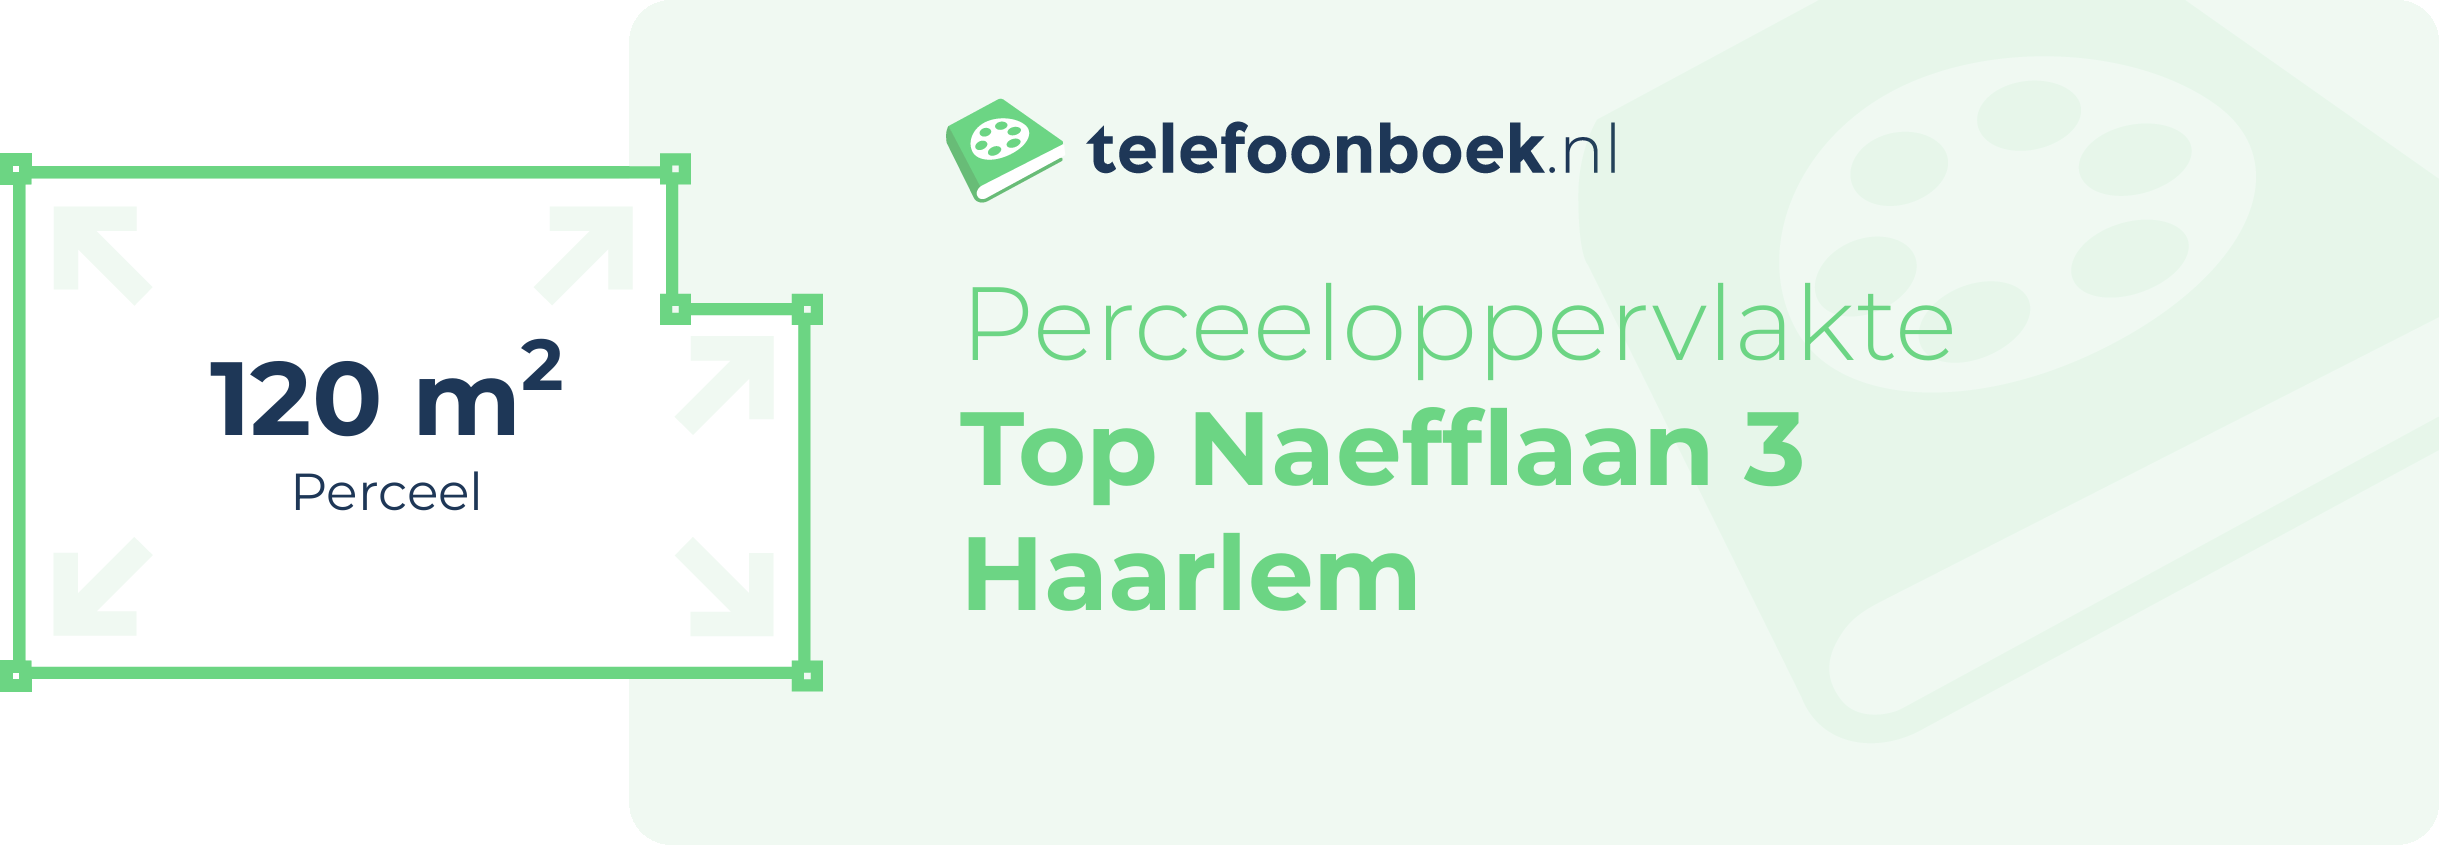 Perceeloppervlakte Top Naefflaan 3 Haarlem